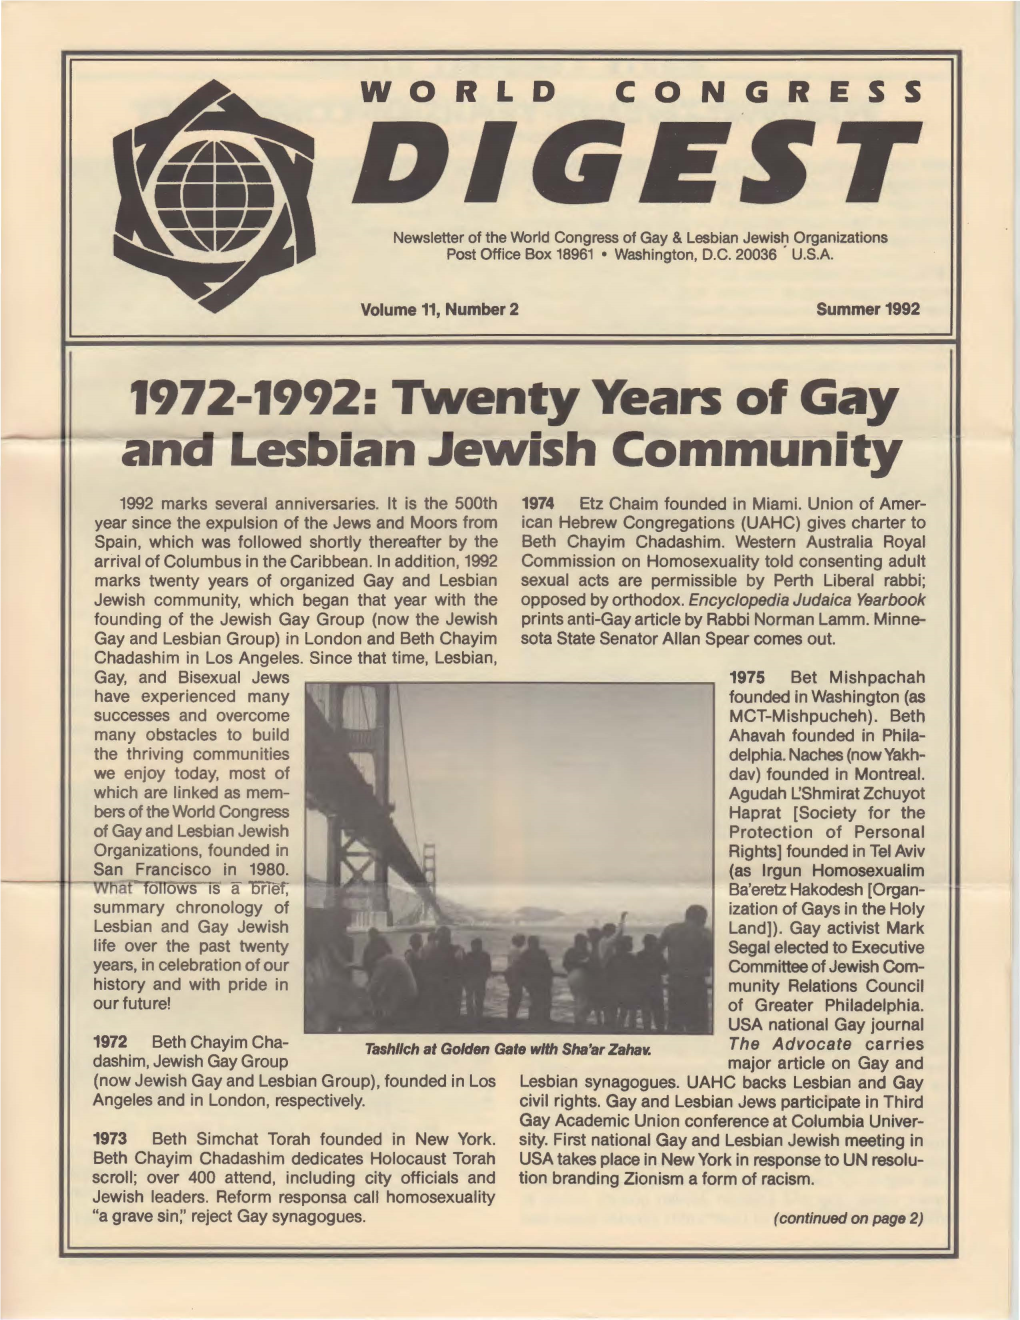 1972-1992: Twenty Years of Gay and Lesbian Jewish Community